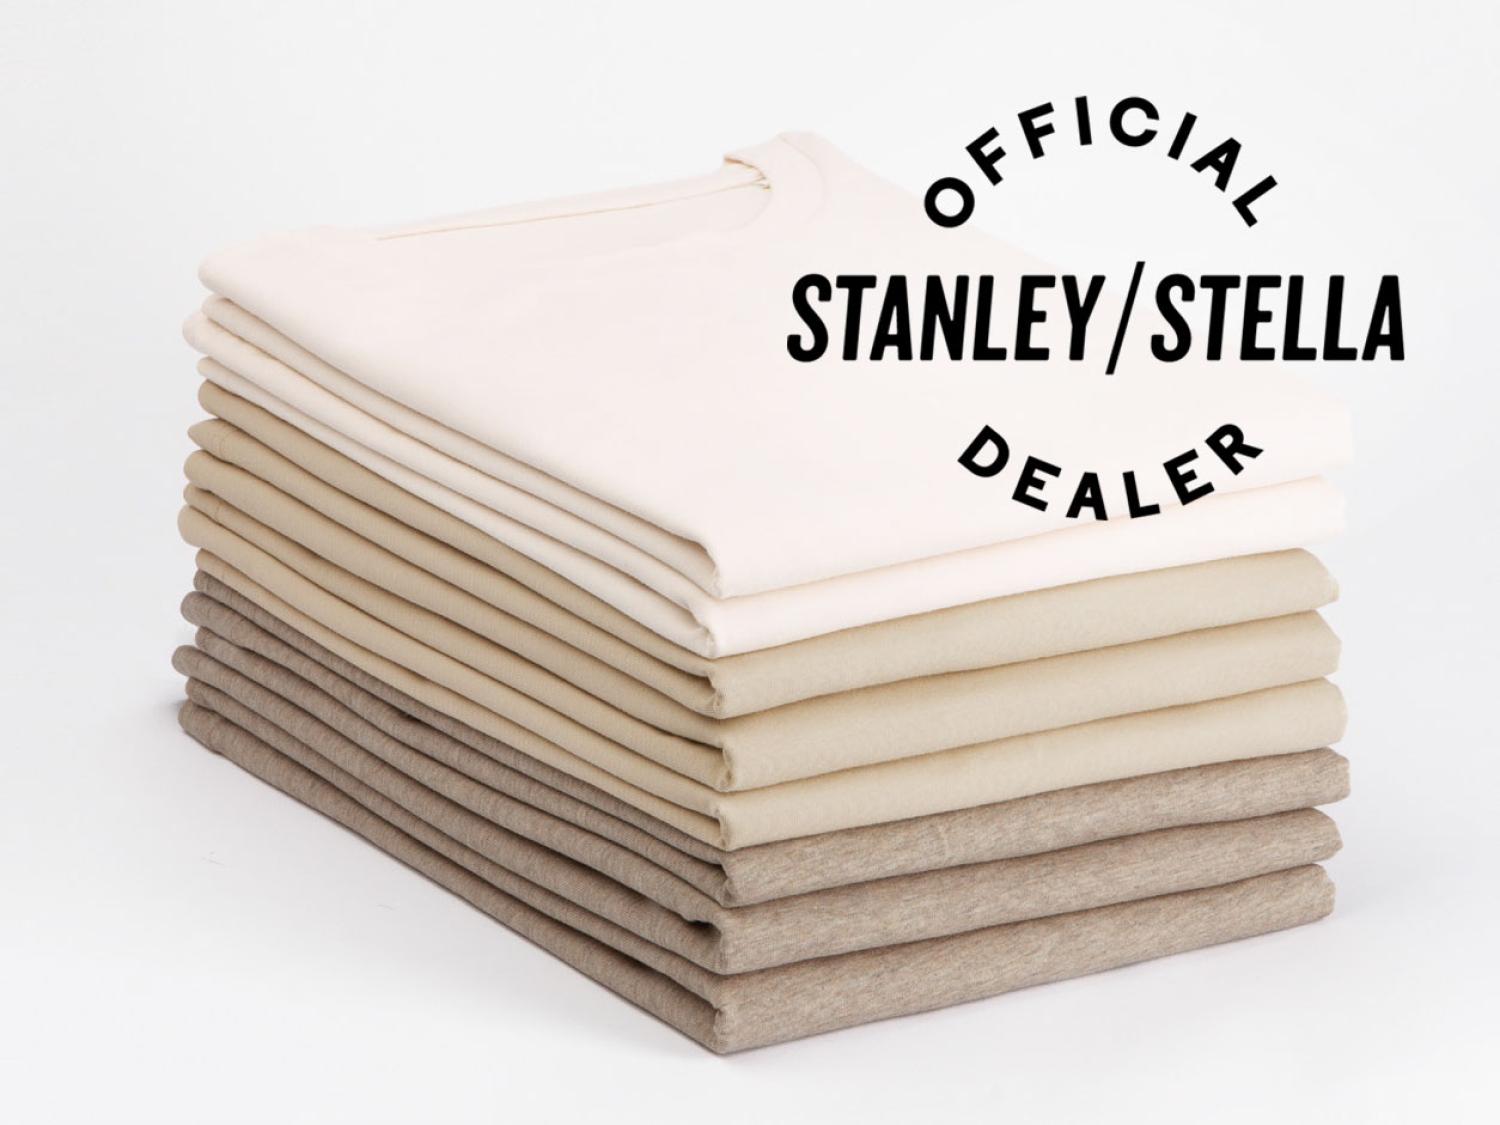 WeLoco partner ufficiale Stanley/Stella